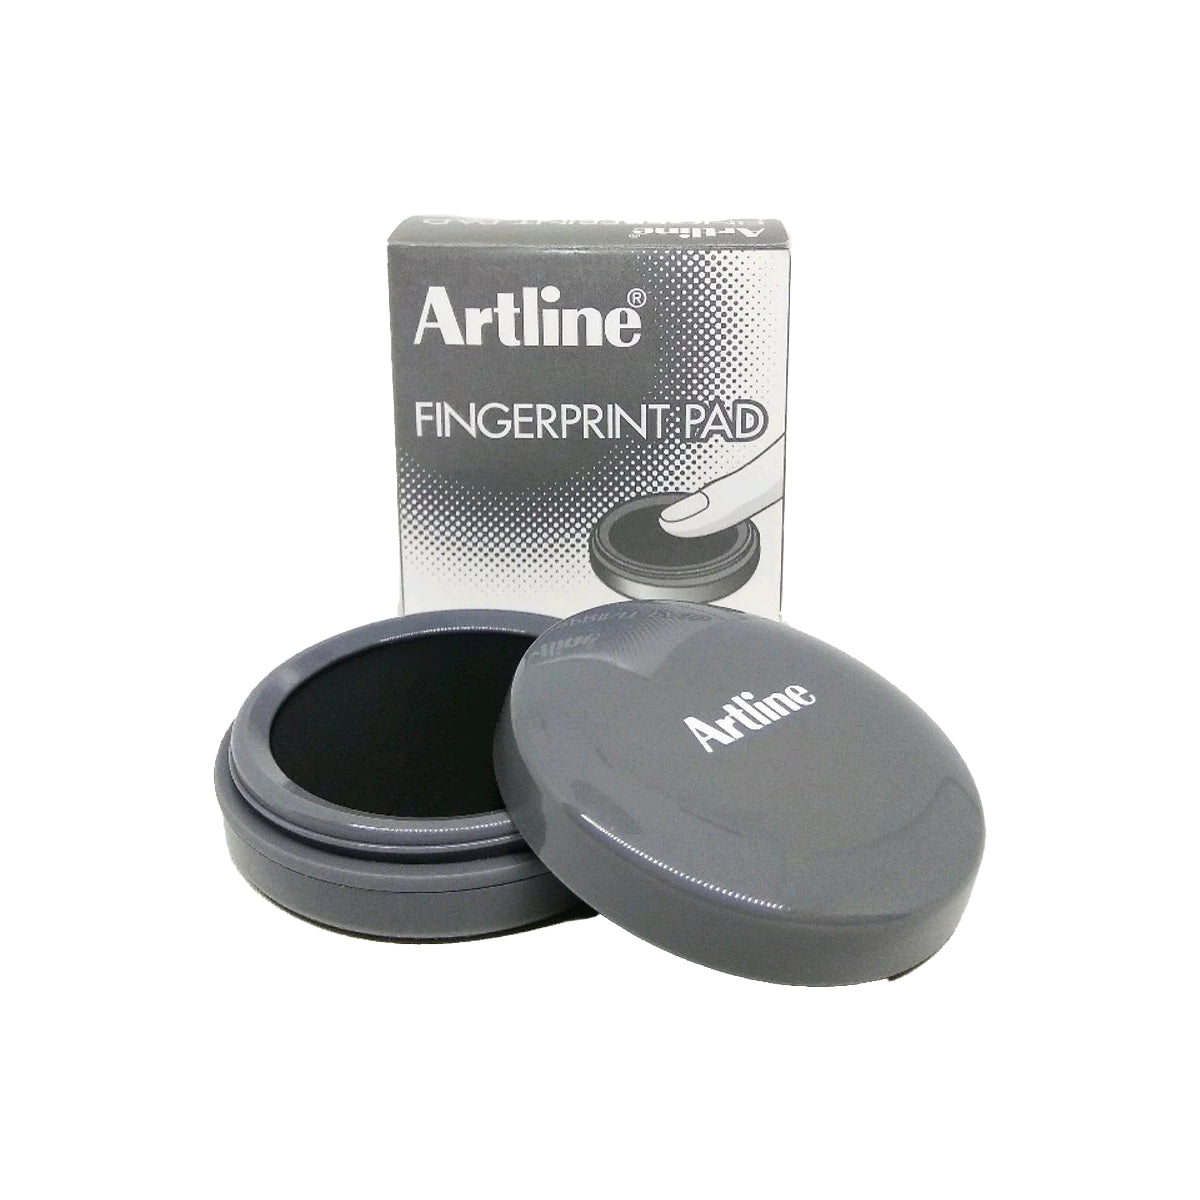 Artline Fingerprint Pad EFP-40, Black